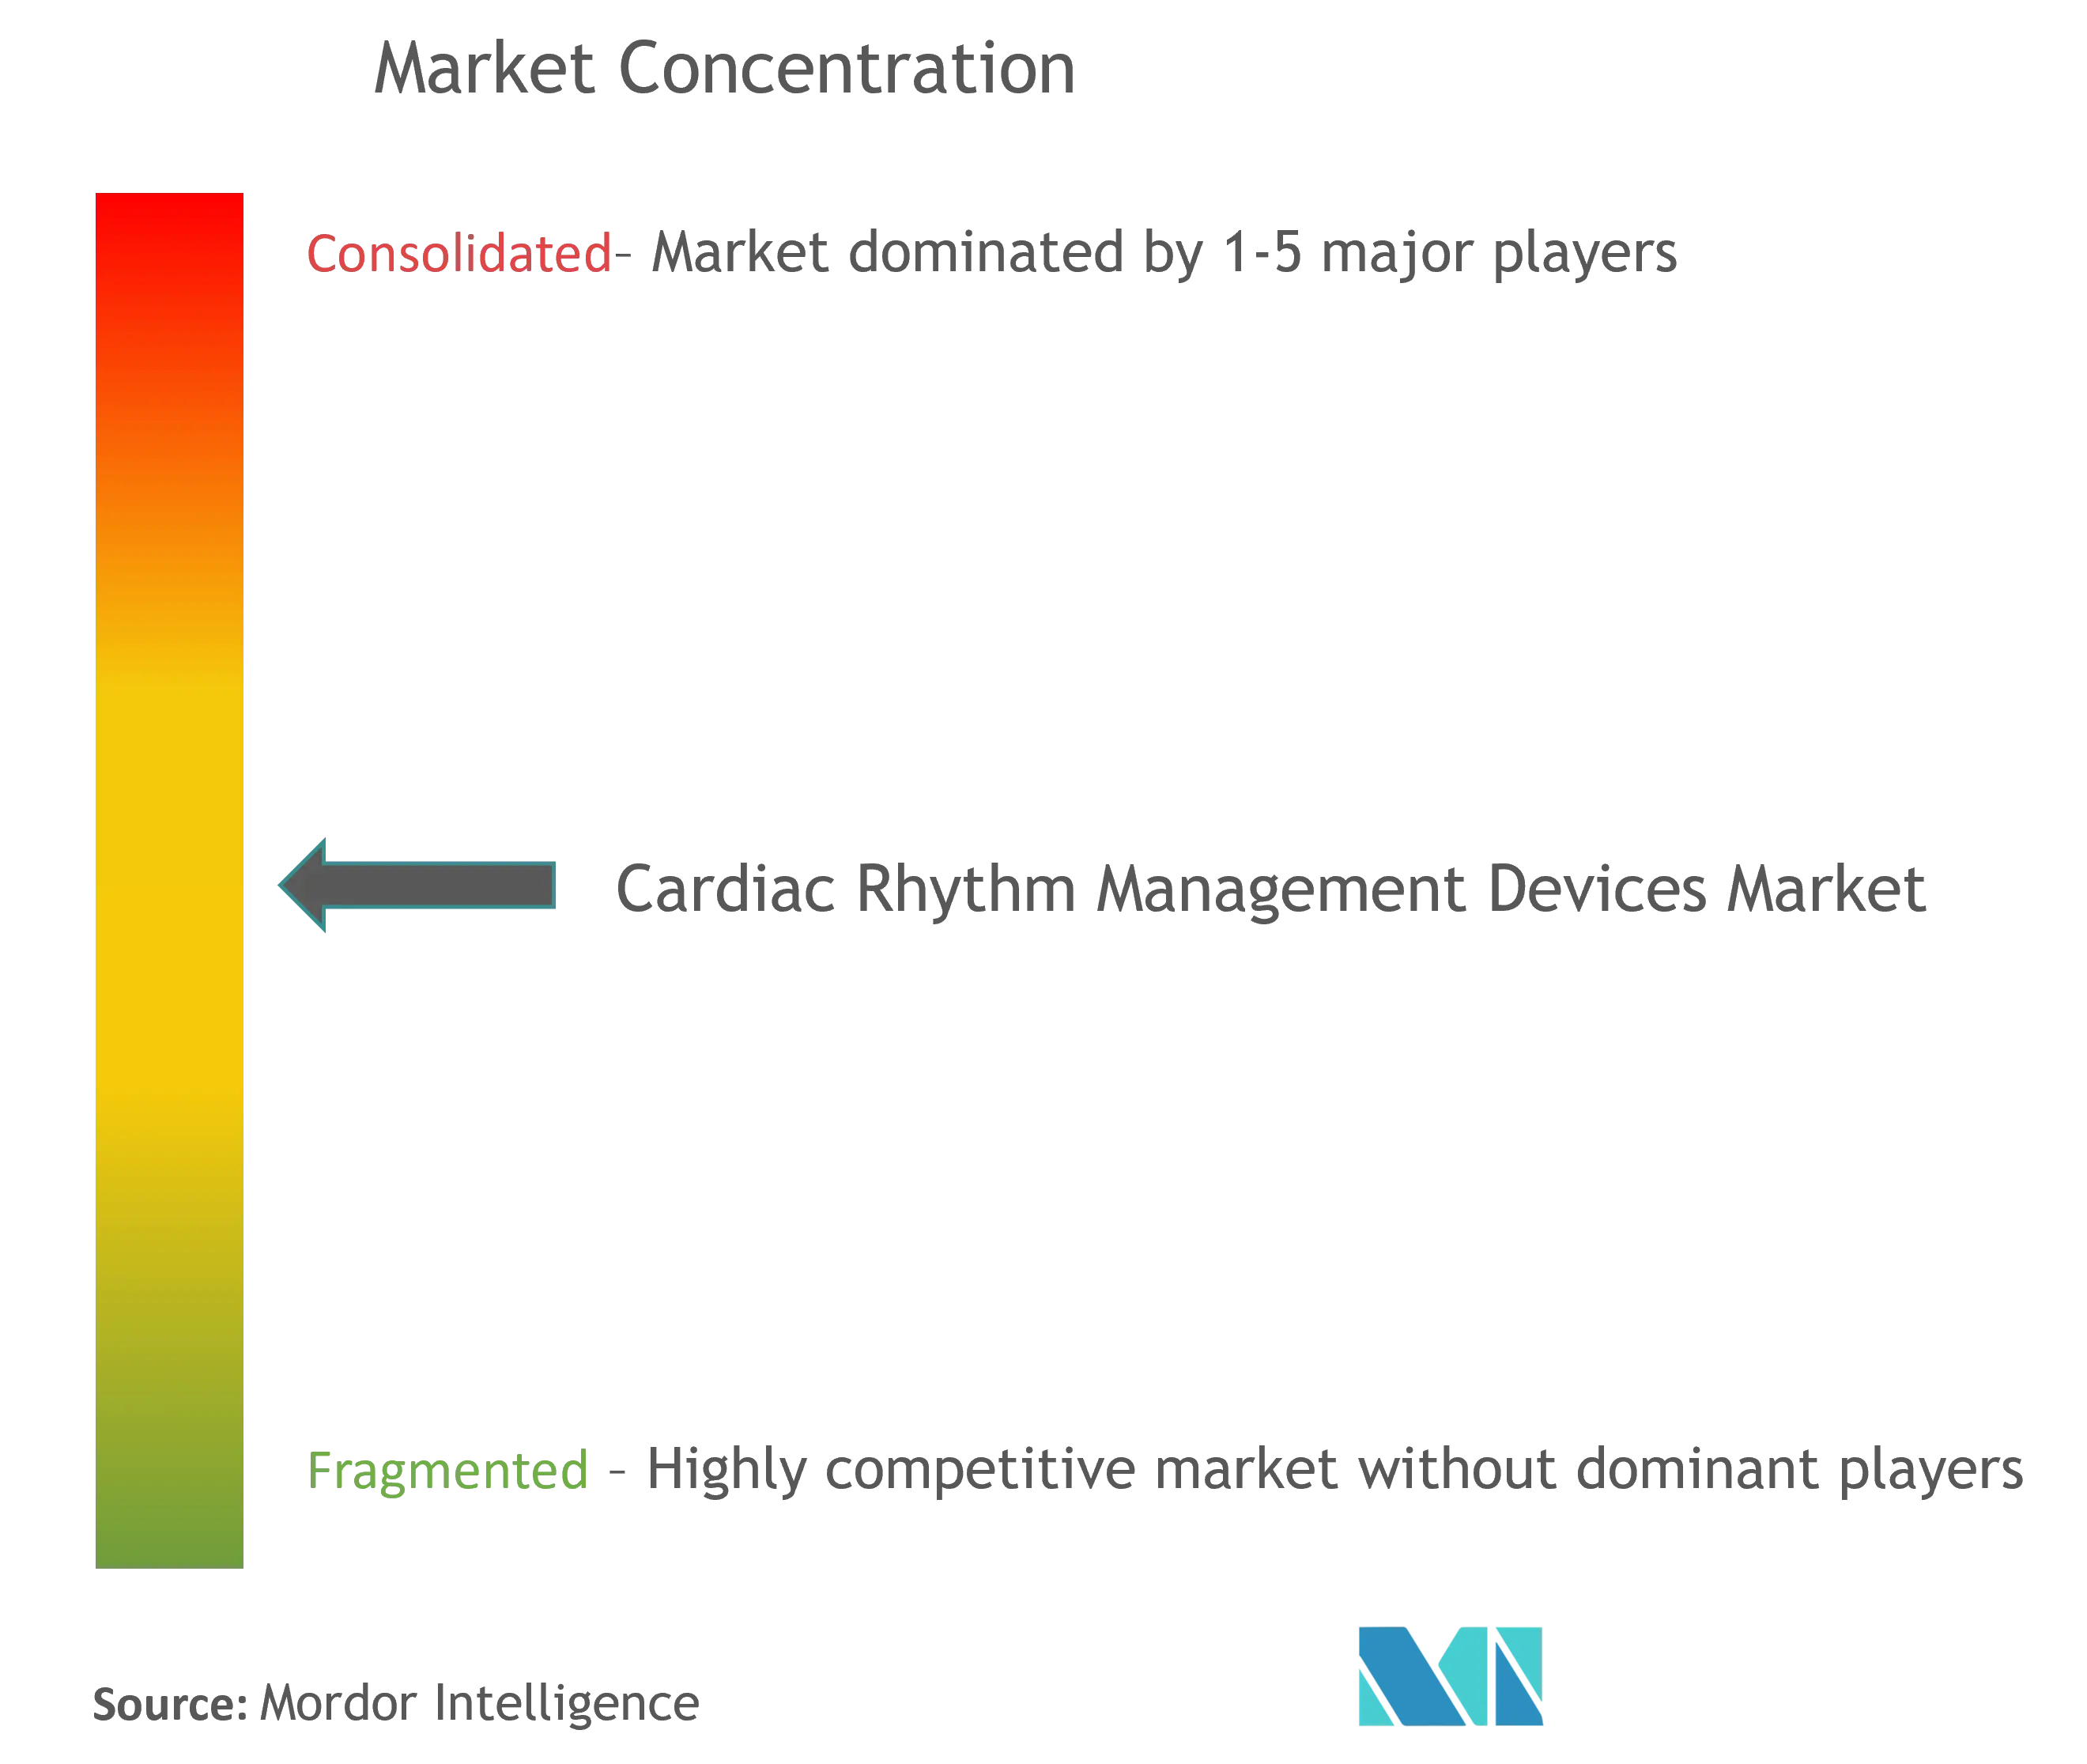 Cardiac Rhythm Management Devices Market Concentration